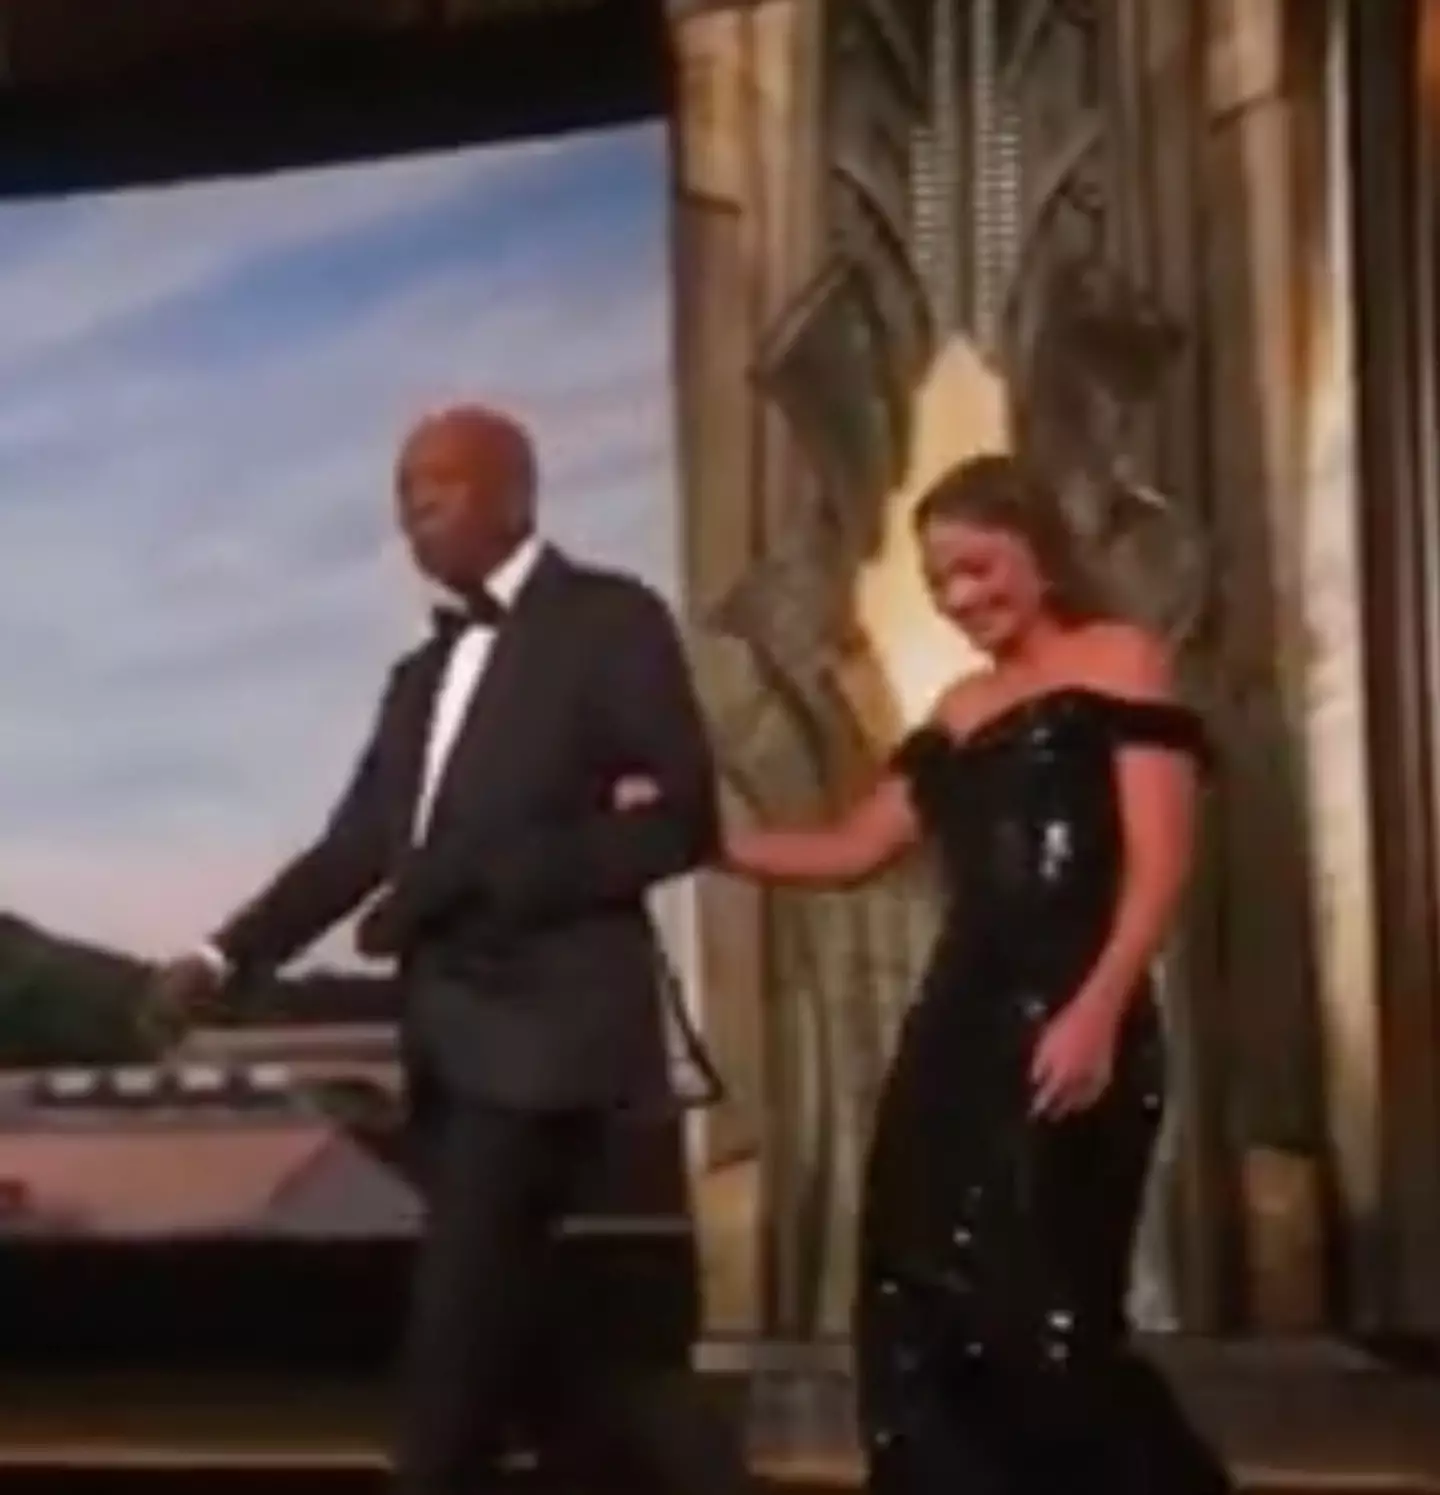 Morgan Freeman was wearing a black glove during the Oscars.